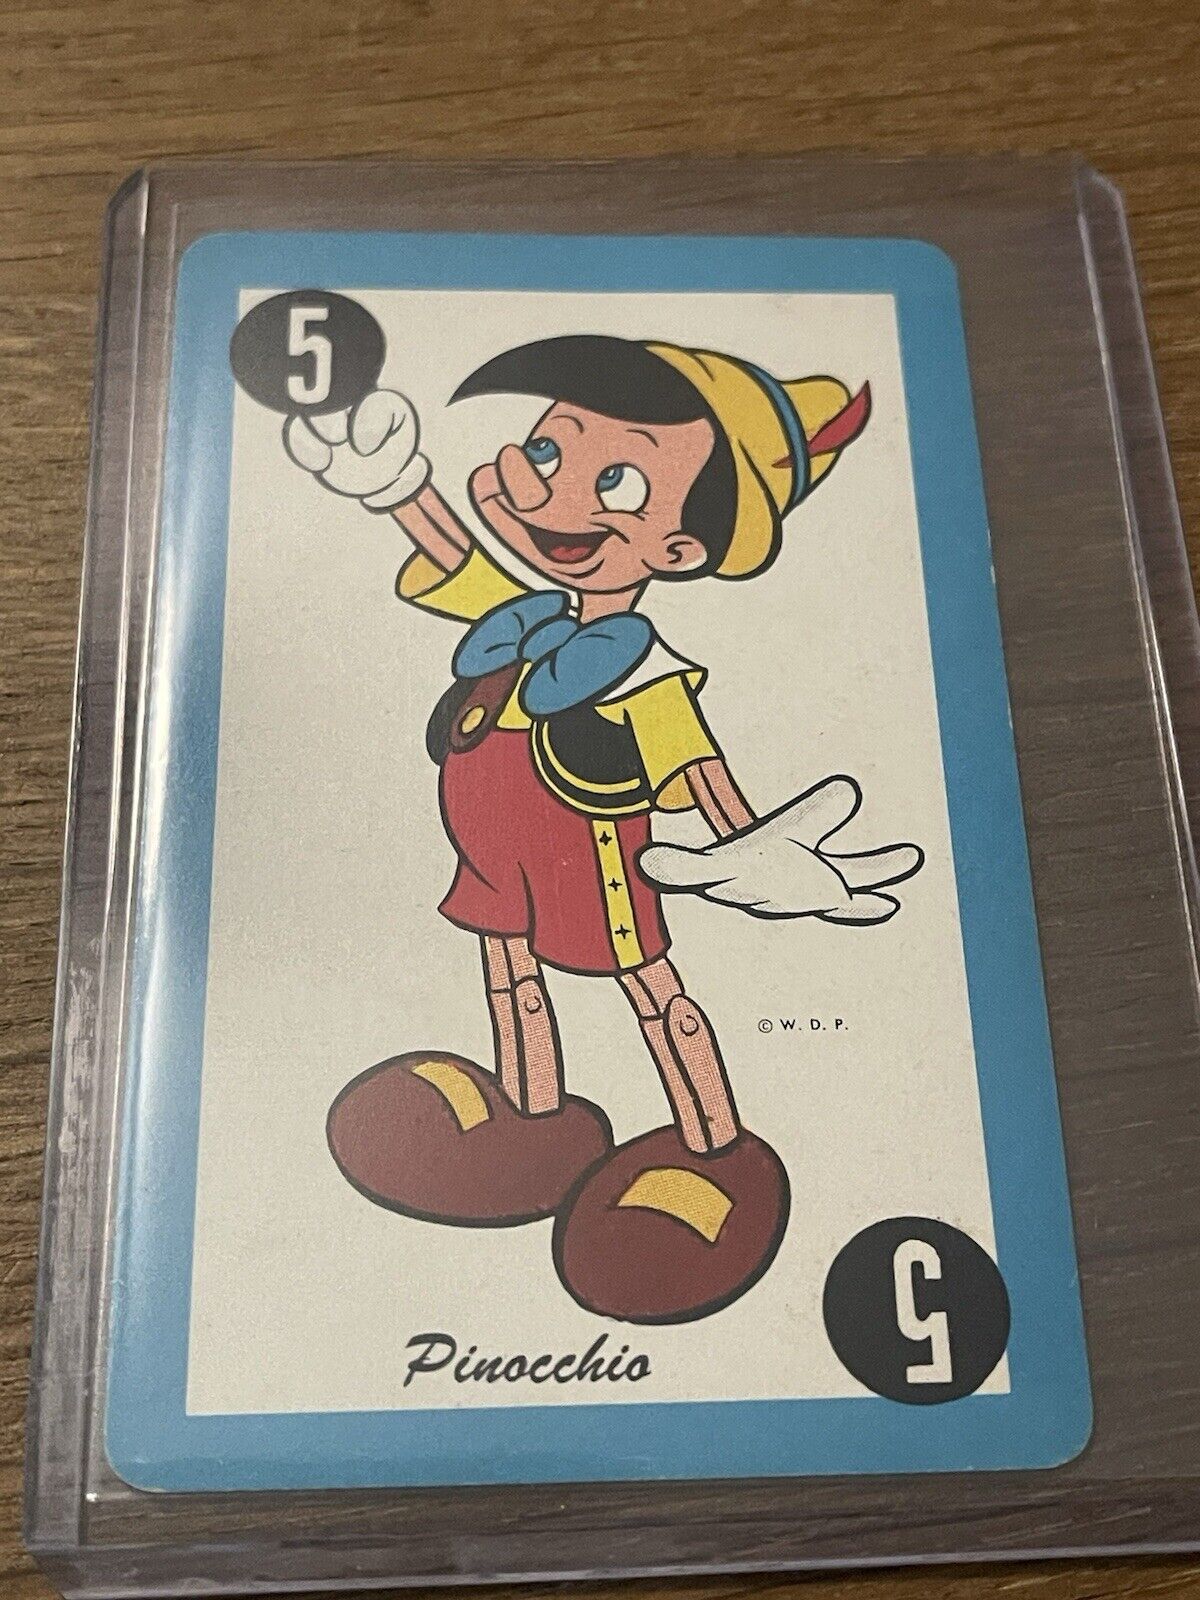 1949 WALT DISNEY PRODUCTIONS 🎥 WHITMAN CARD GAME PINOCCHIO PLAYING CARD